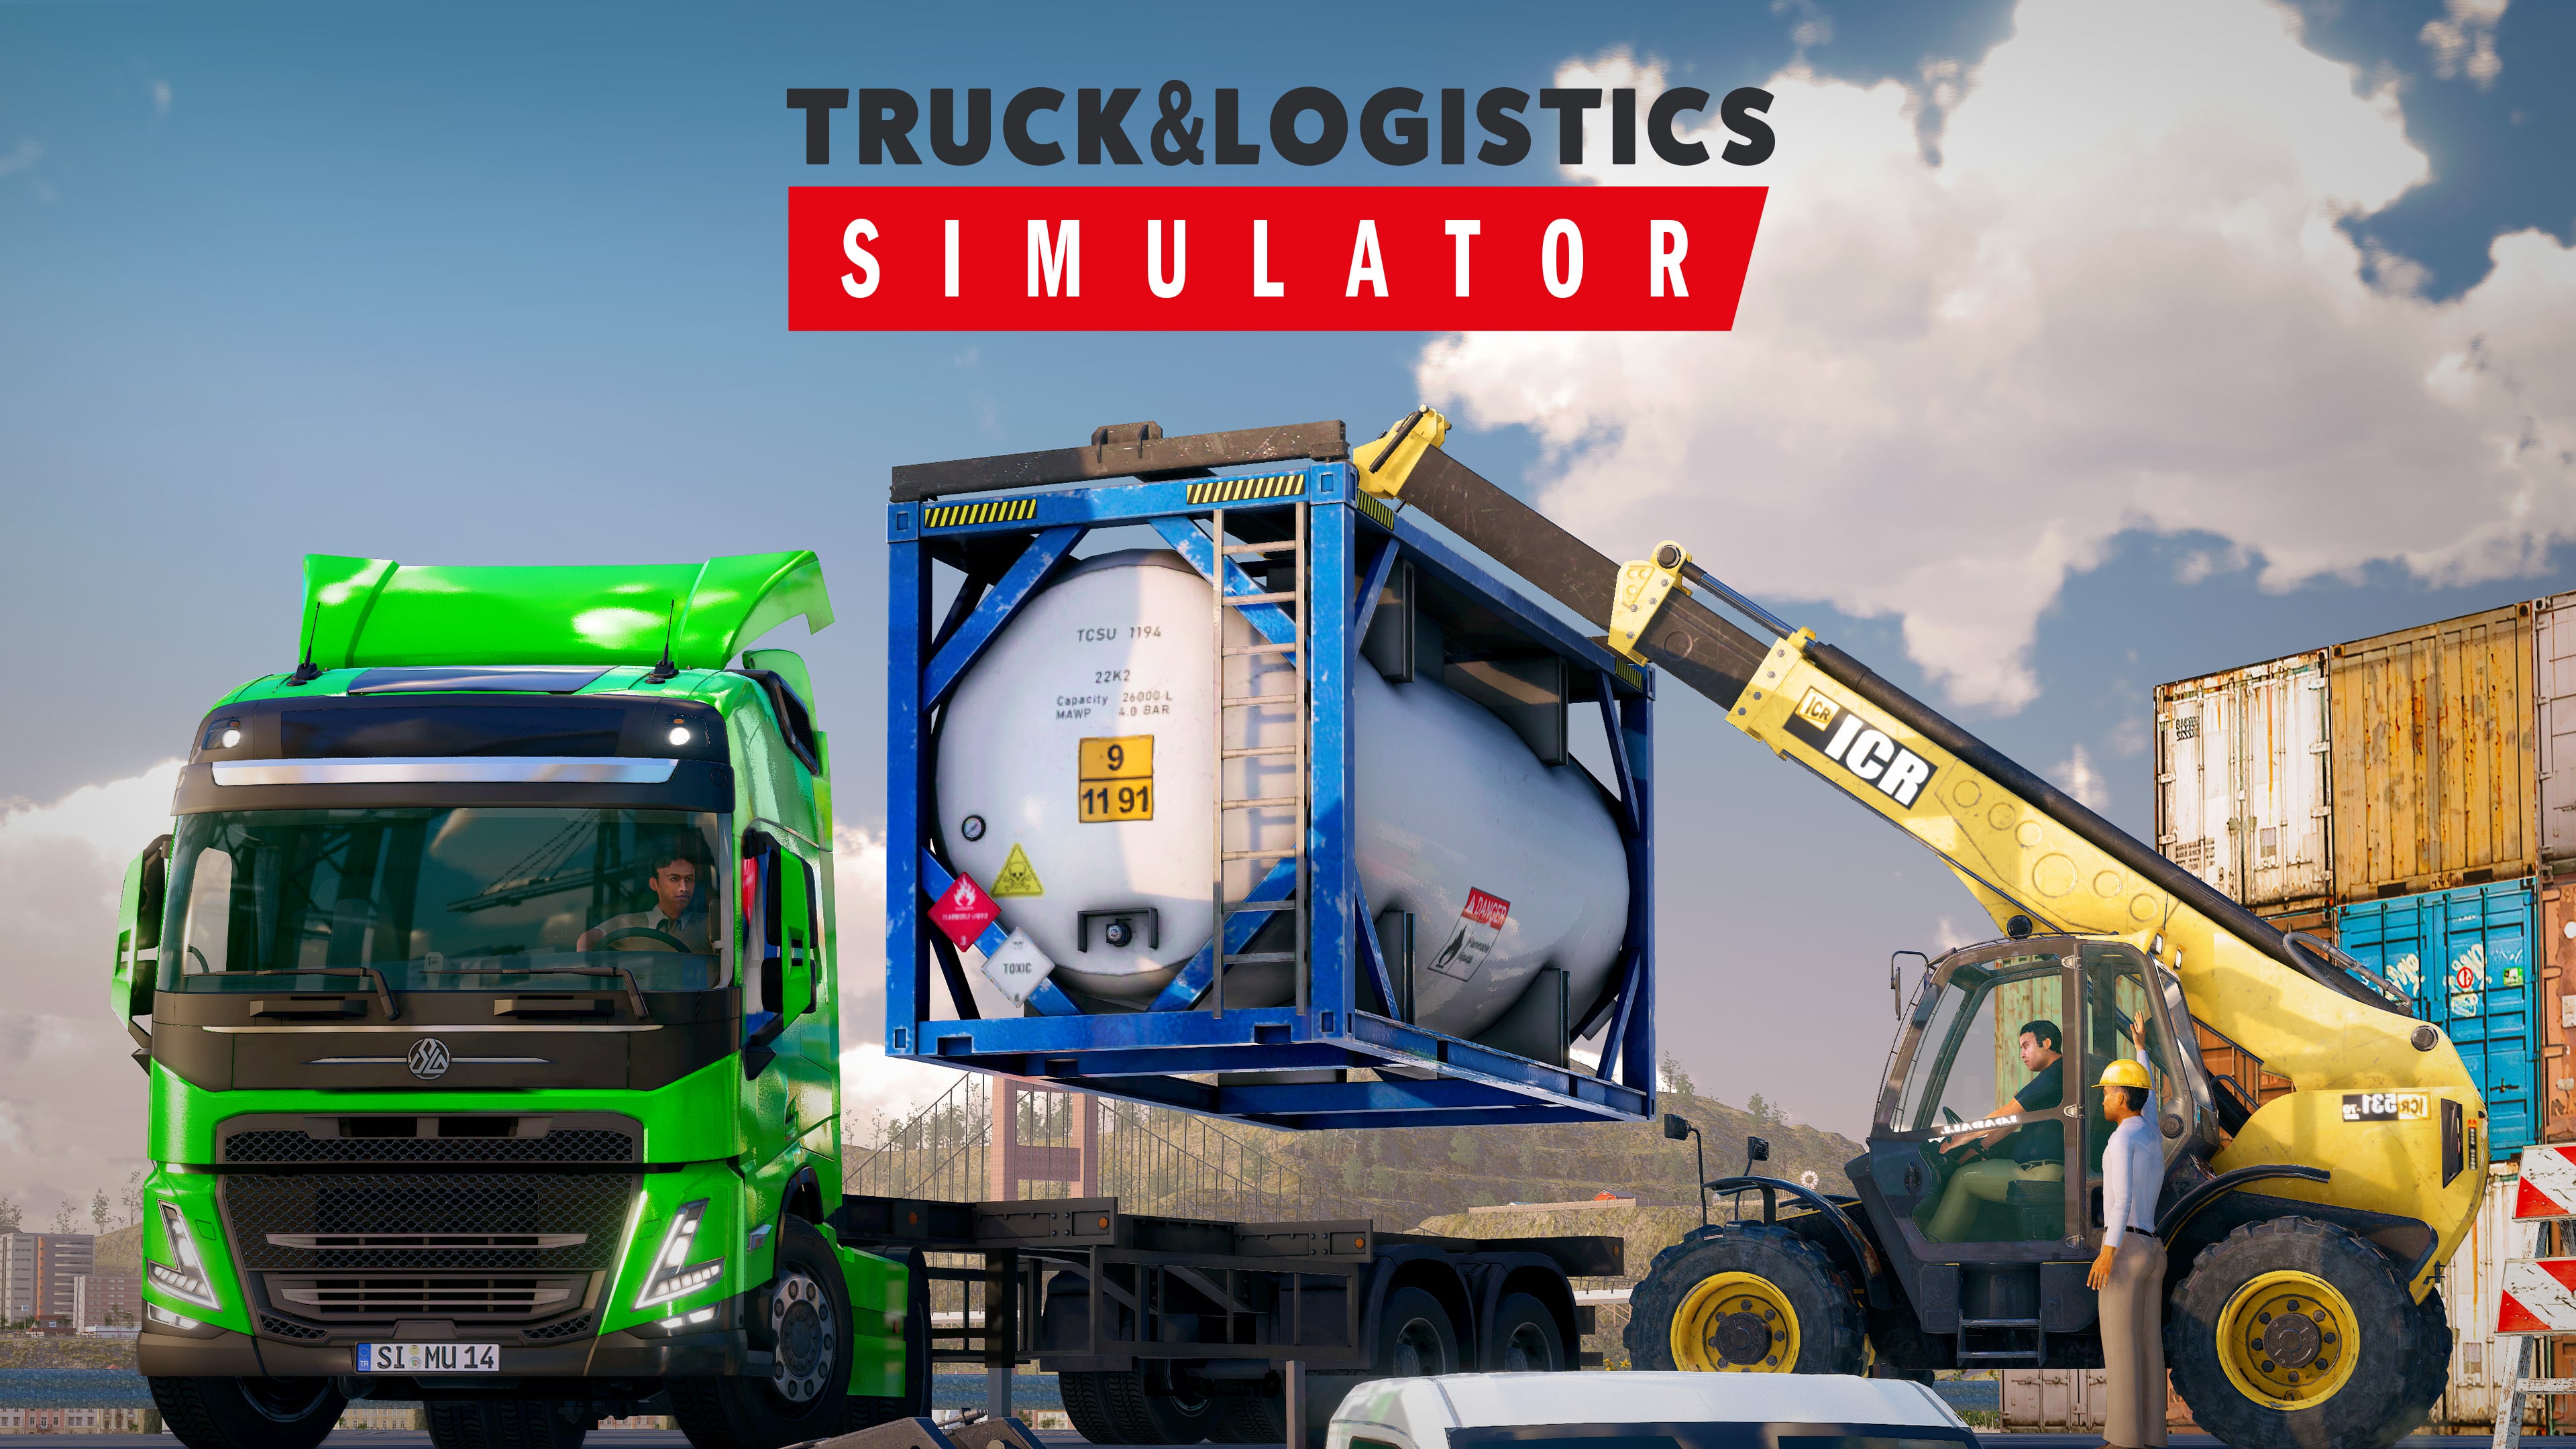 Truck & Logistics Simulator (중국어(간체자), 영어, 일본어)